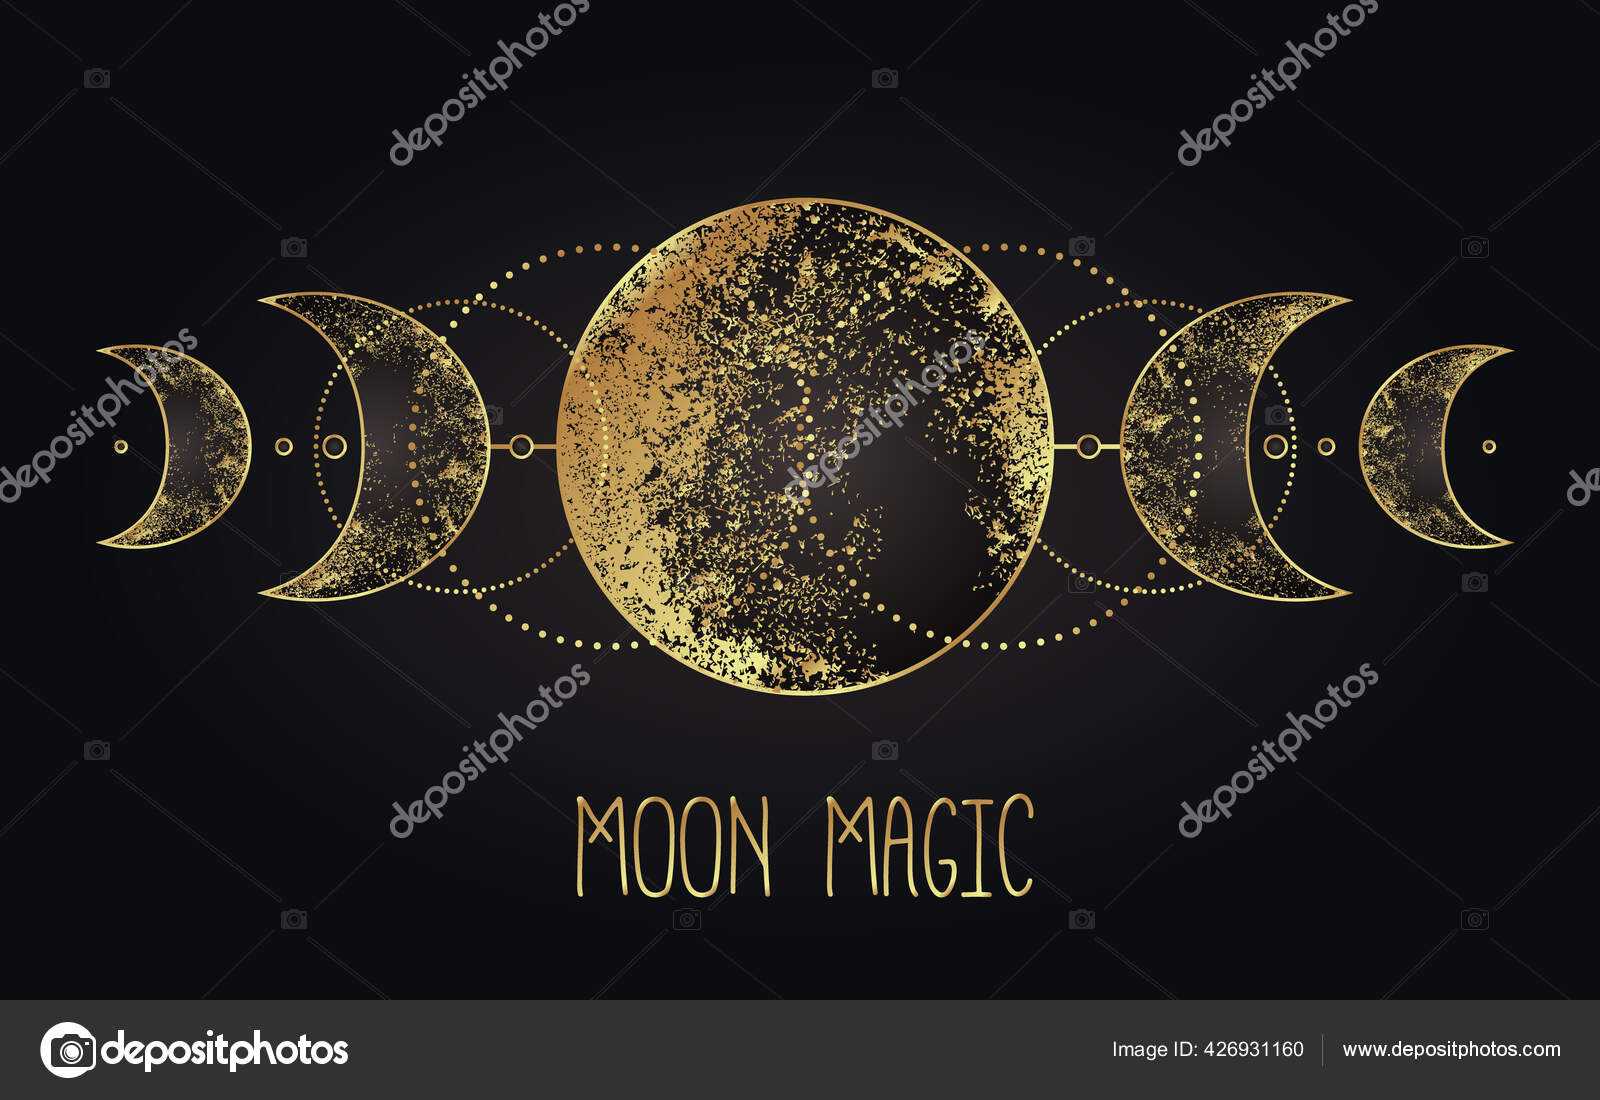 2 x Vinyl Stickers 20cm Wicca Moon Magic Astrology Alchemy Boho  #46428 